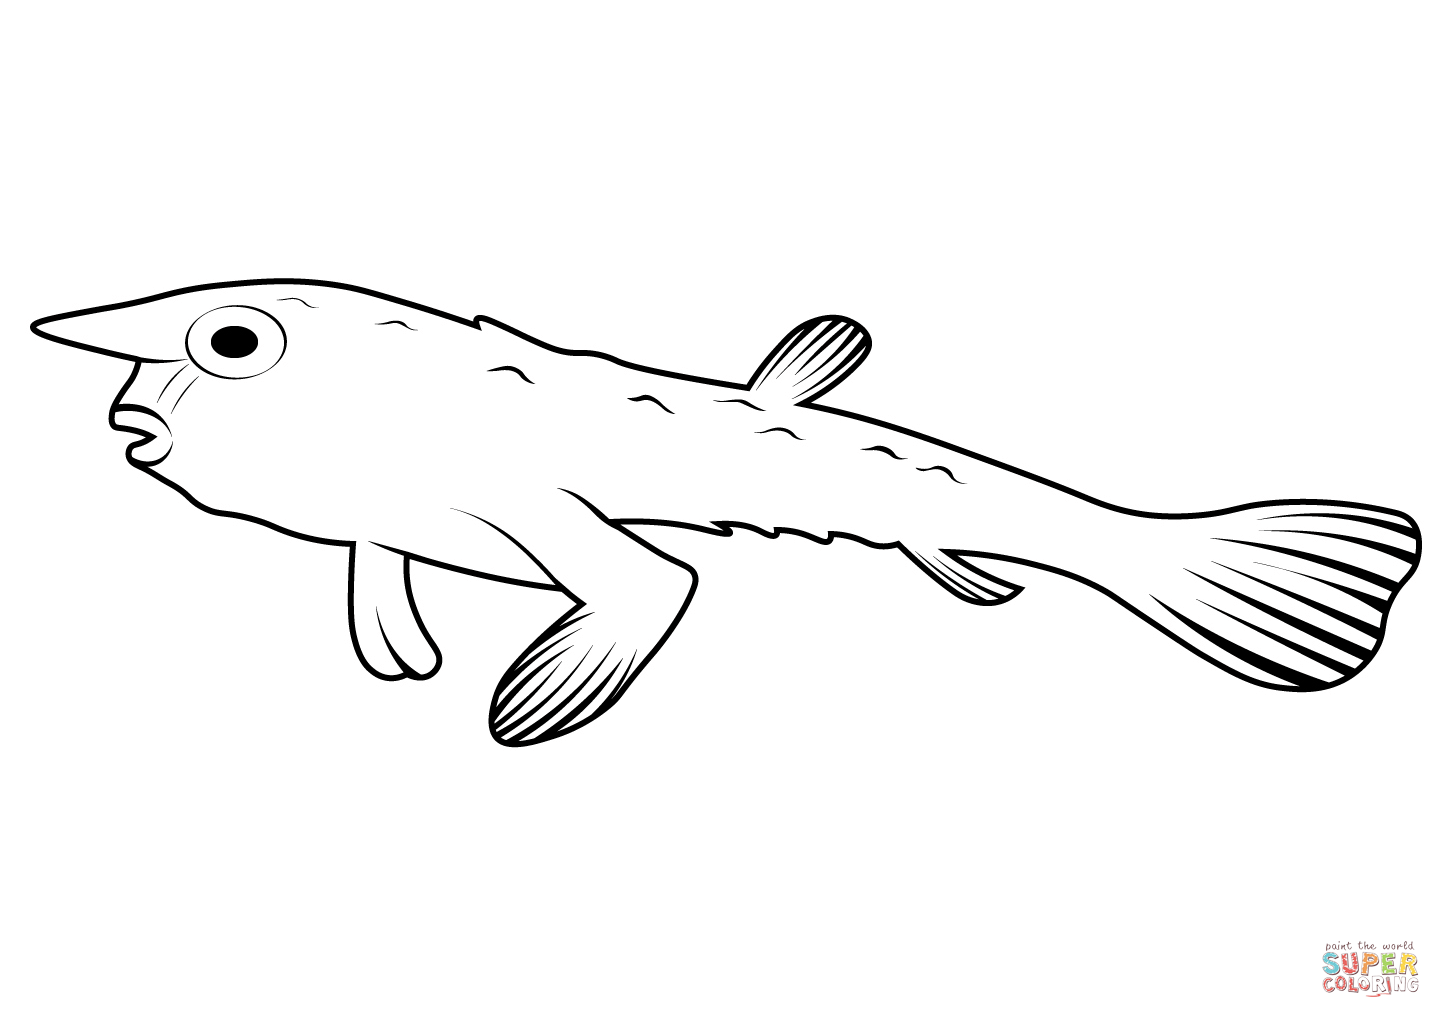 Dibujo de pez murciãlago de labios rojos ogcocephalus darwini para colorear dibujos para colorear imprimir gratis